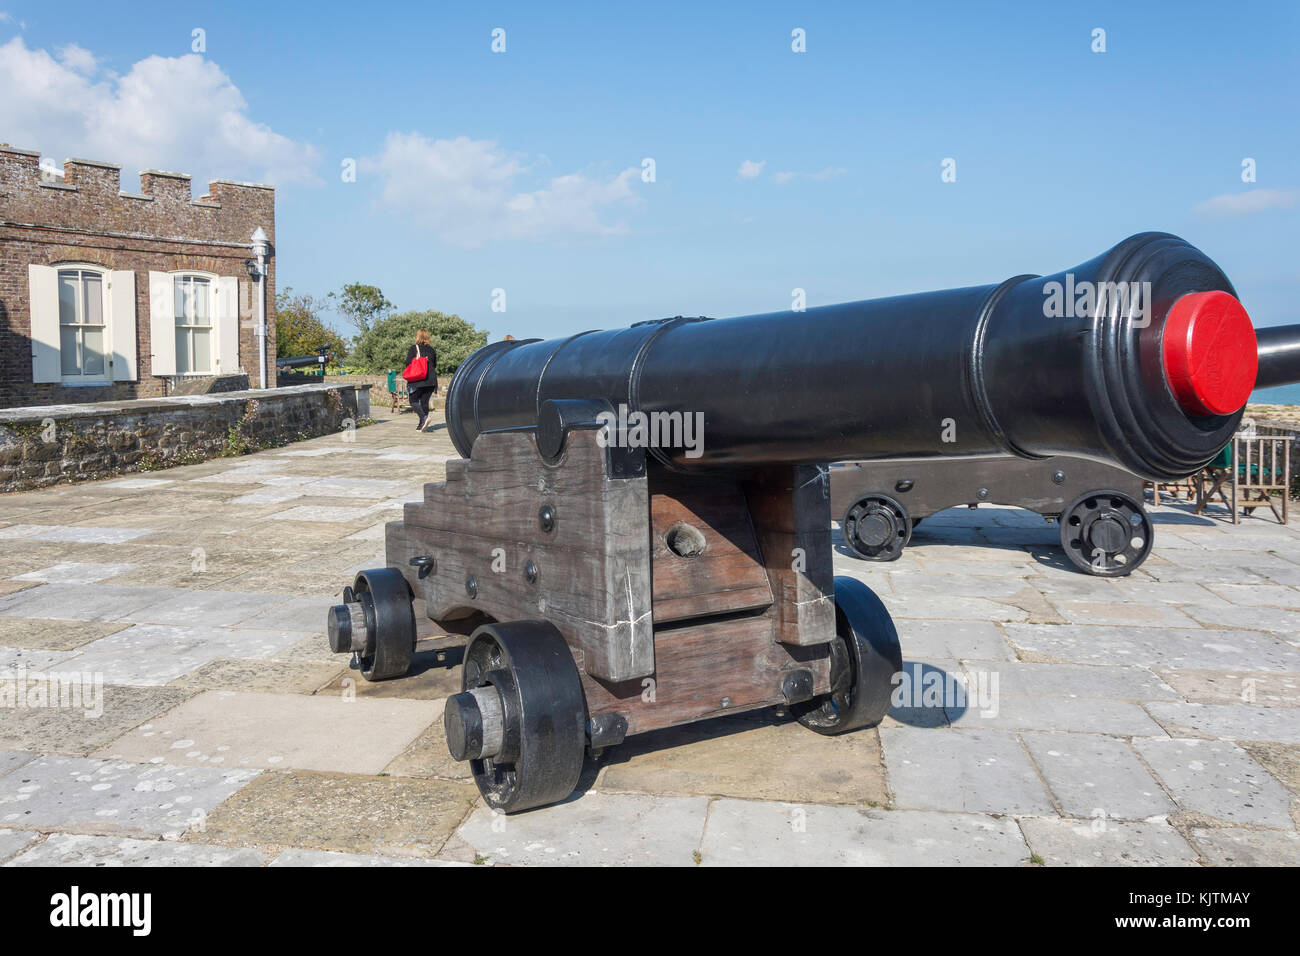 Cannons on castle's firing platform, Walmer Castle & Gardens, Kingsdown Road, Walmer, Deal, Kent, England, United Kingdom Stock Photo